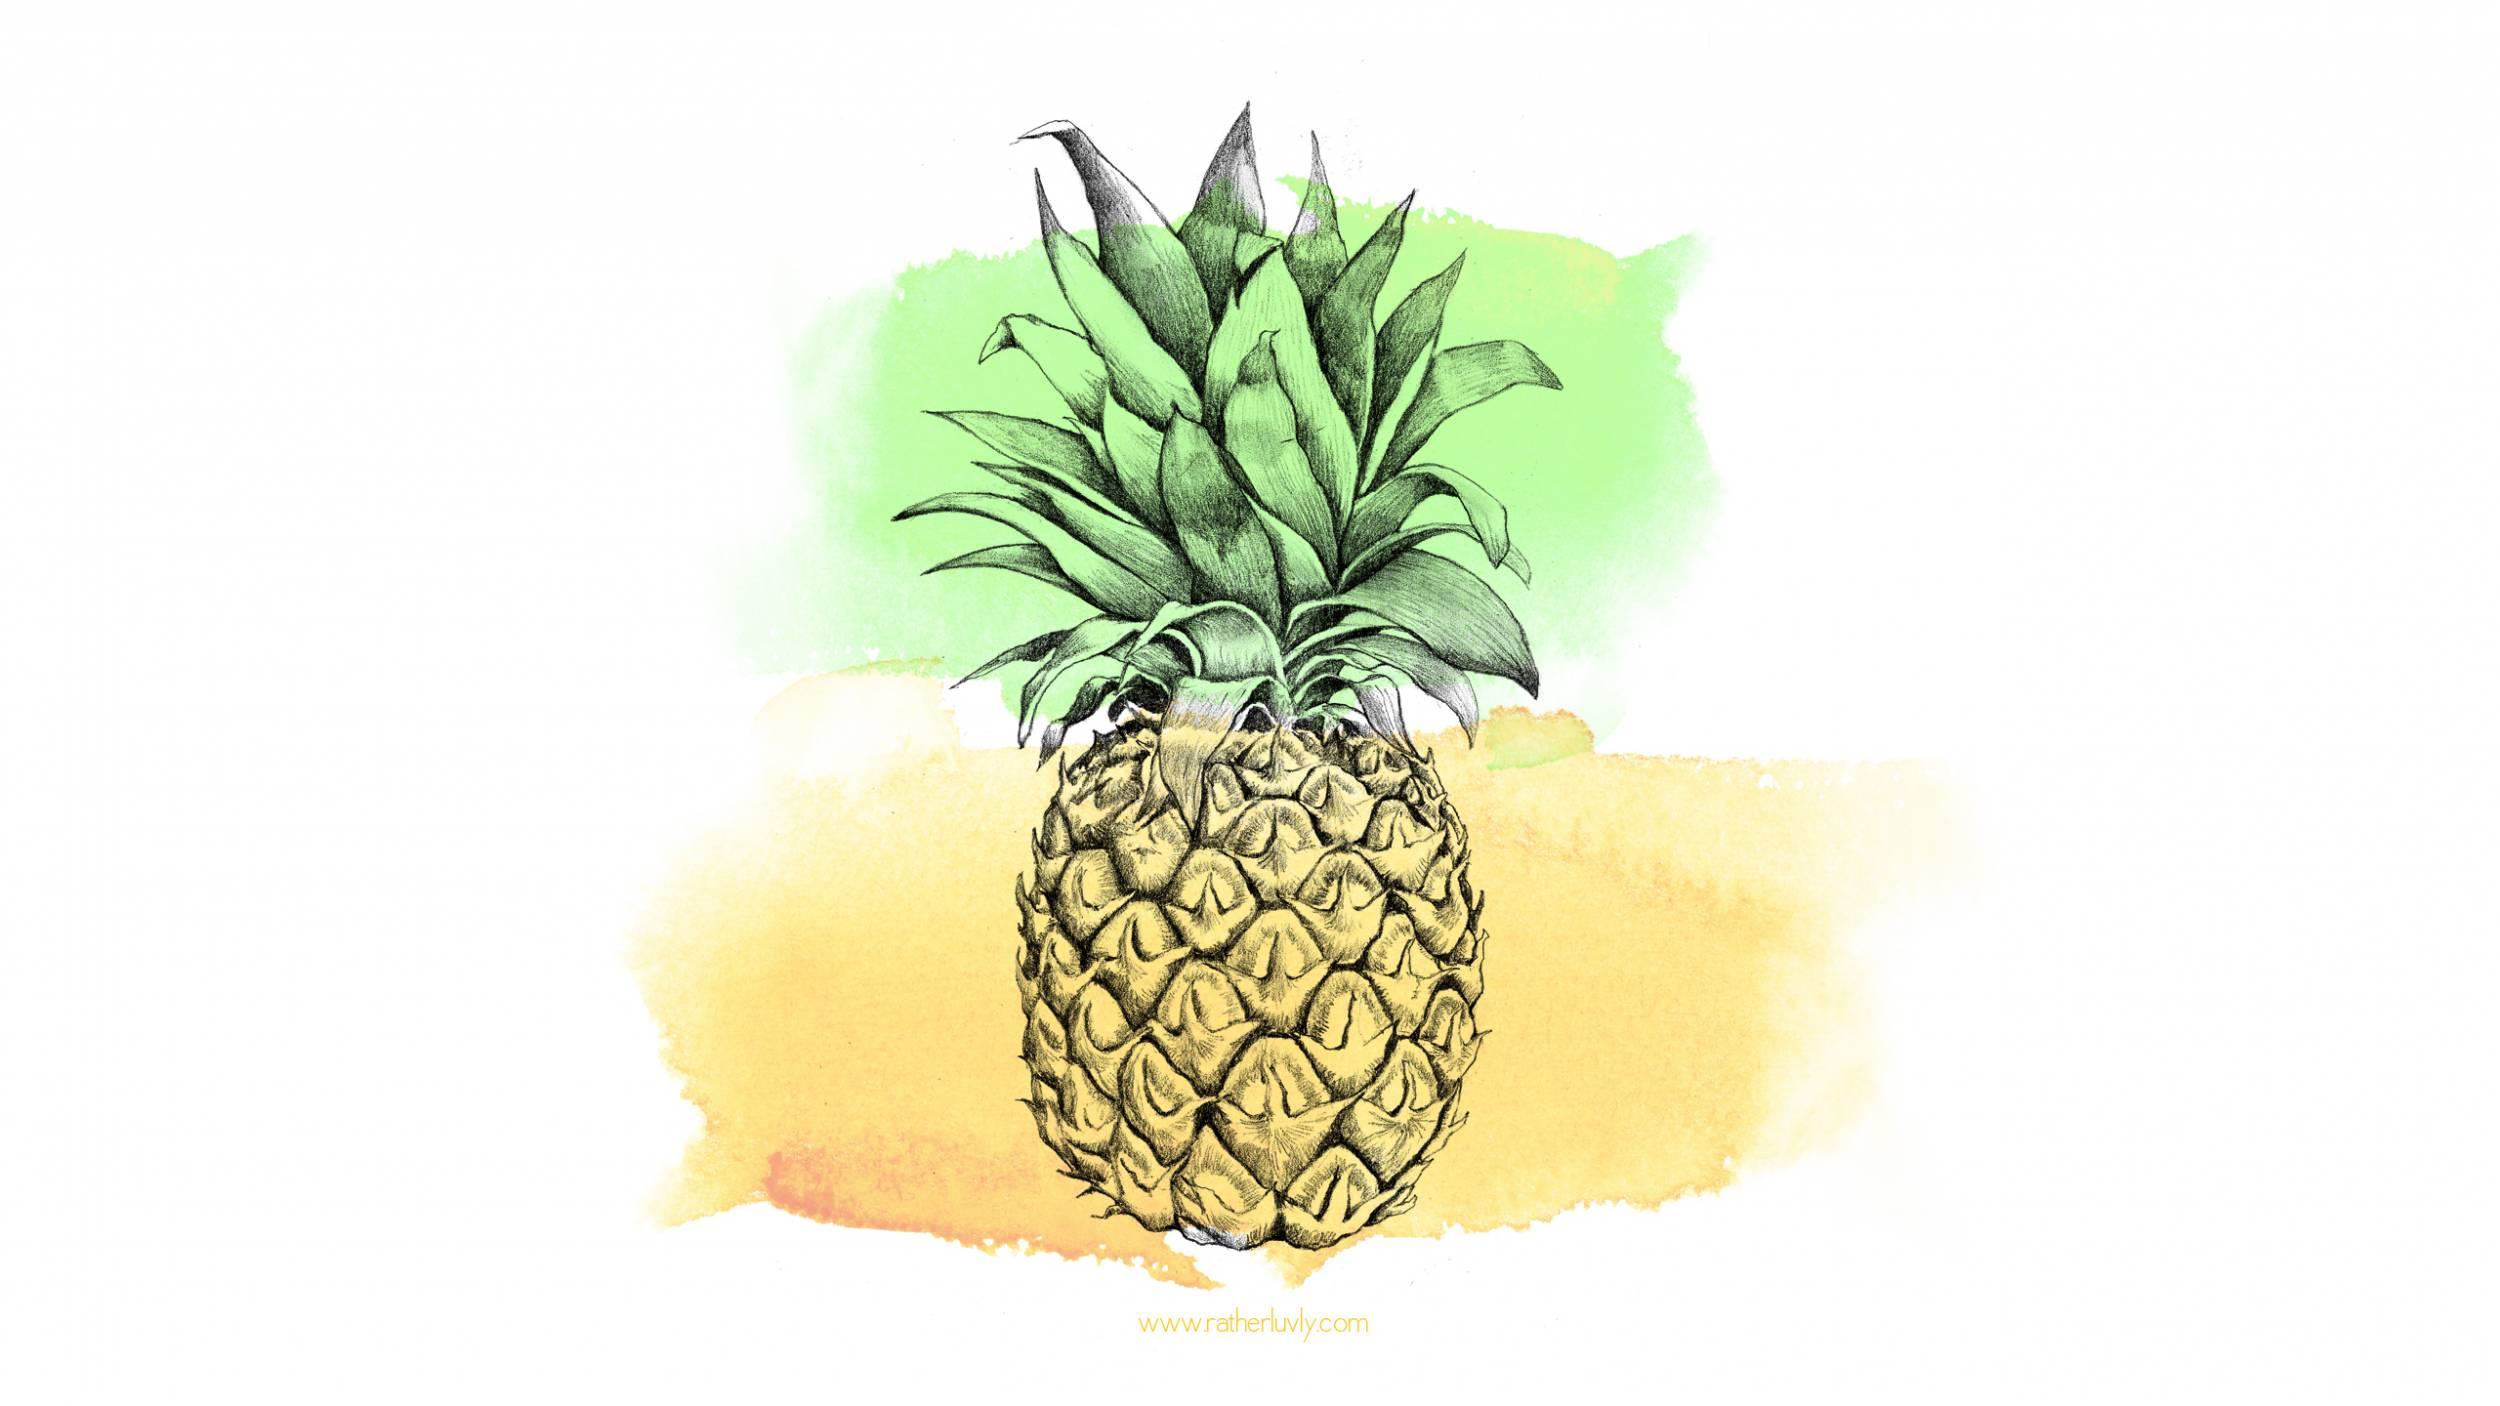 Pineapple Image